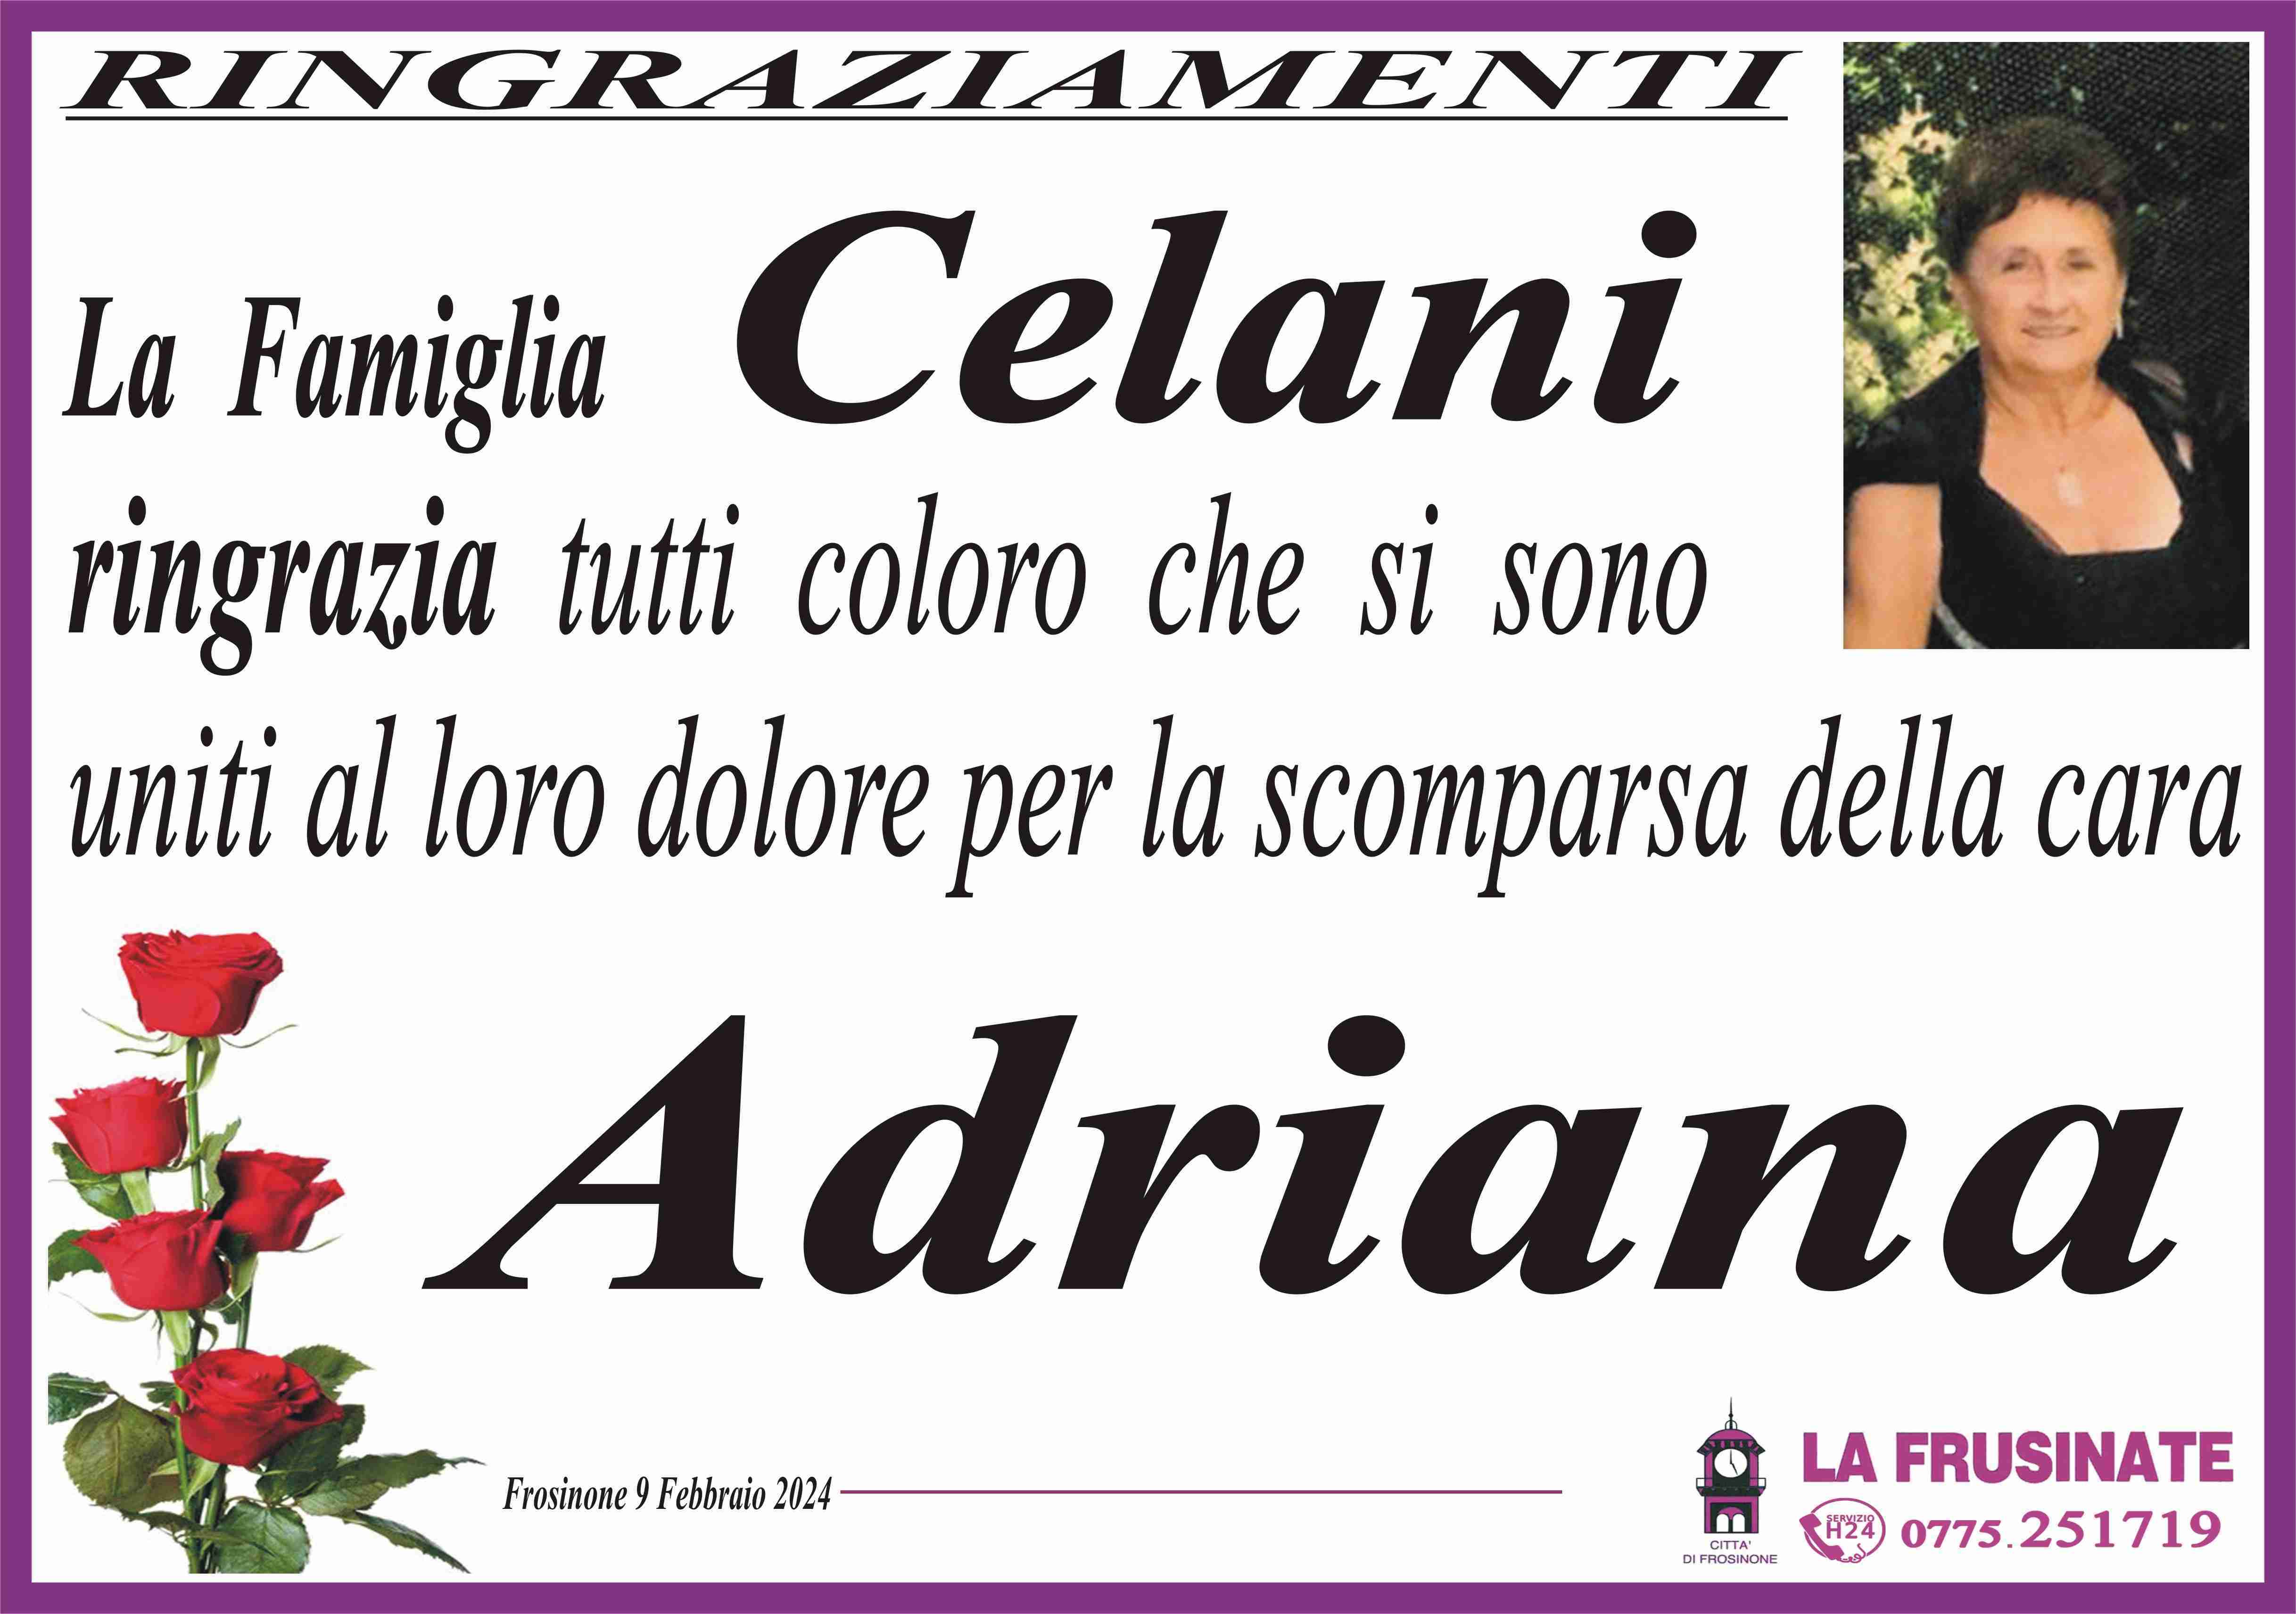 Adriana Celani